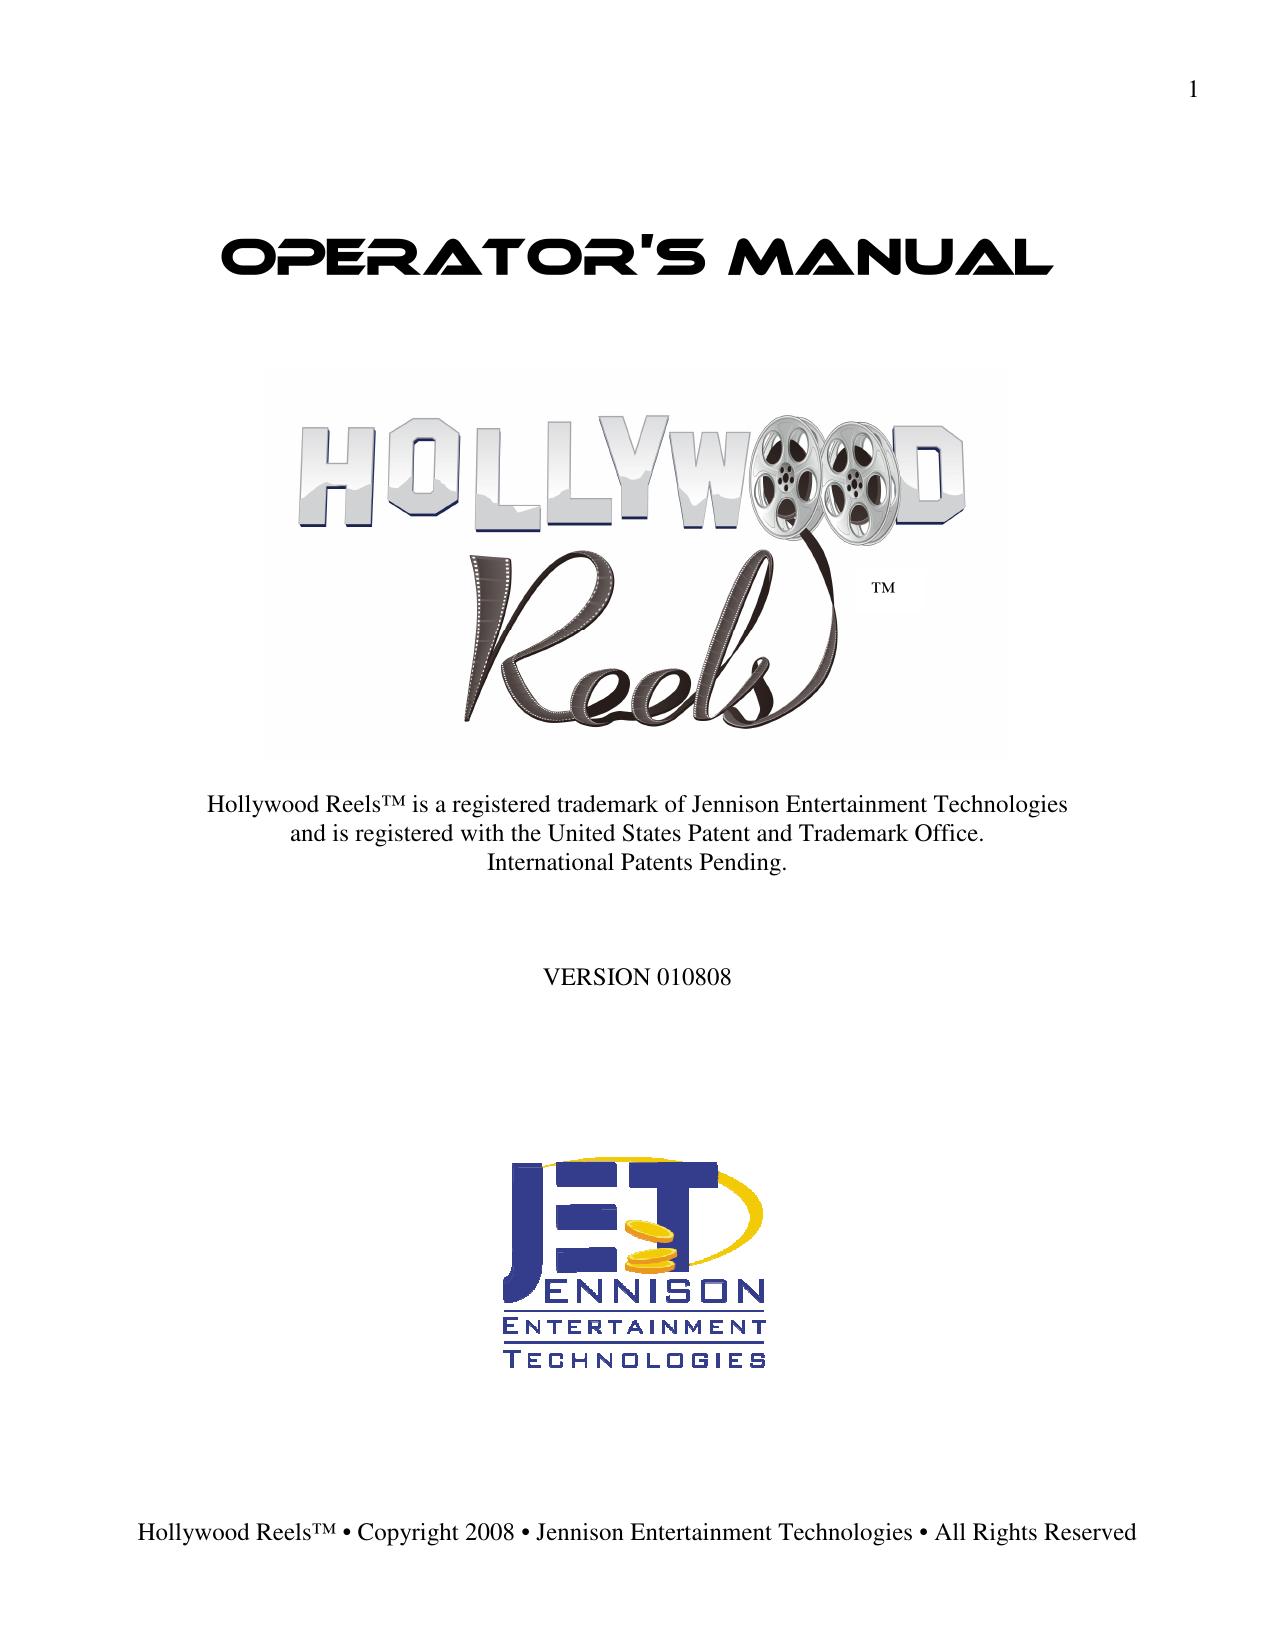 Microsoft Word - Hollywood Reels Operators Manual